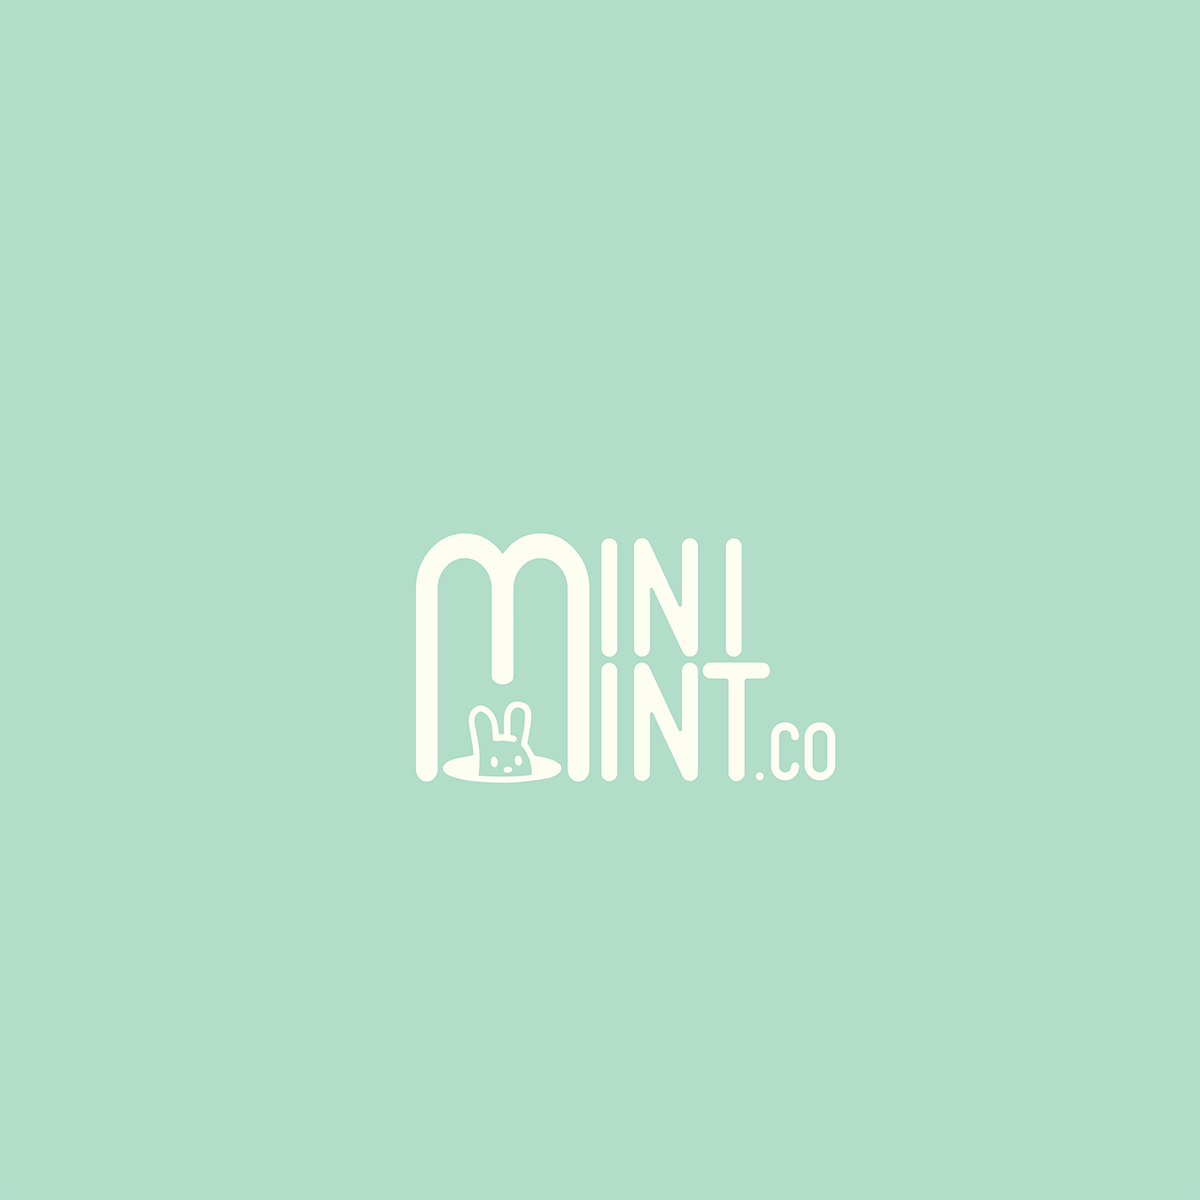 Illustrator logo minimalist